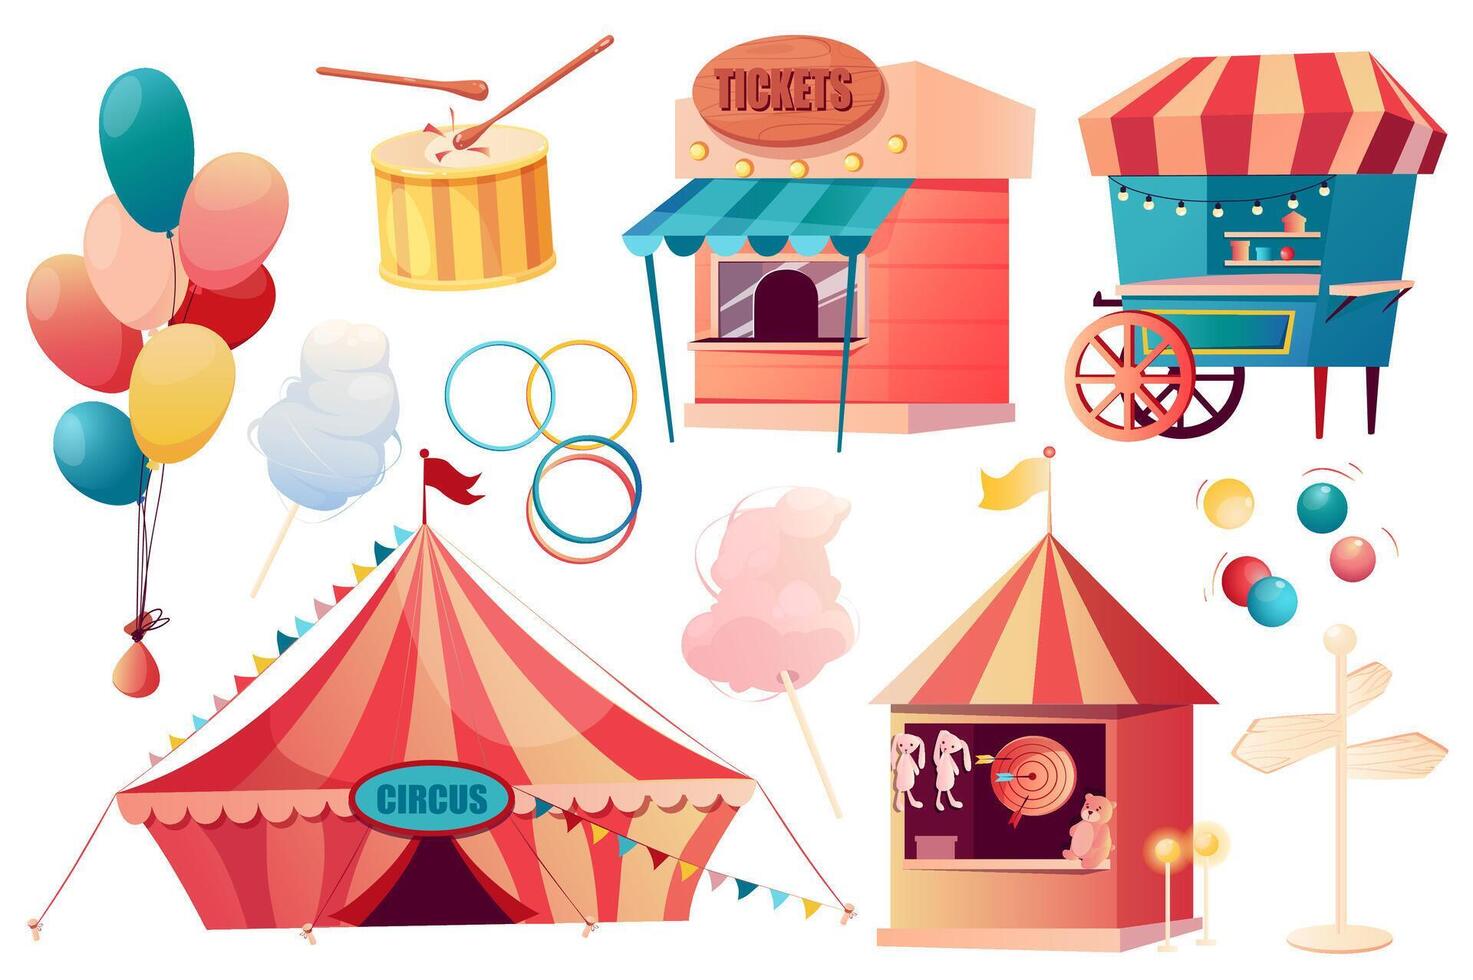 cirkus uppsättning grafisk element i platt design. bunt av bås med biljetter, mat kiosk, ballonger, bomull godis, pekare, skytte Galleri, karneval cirkus tält. vektor illustration isolerat objekt